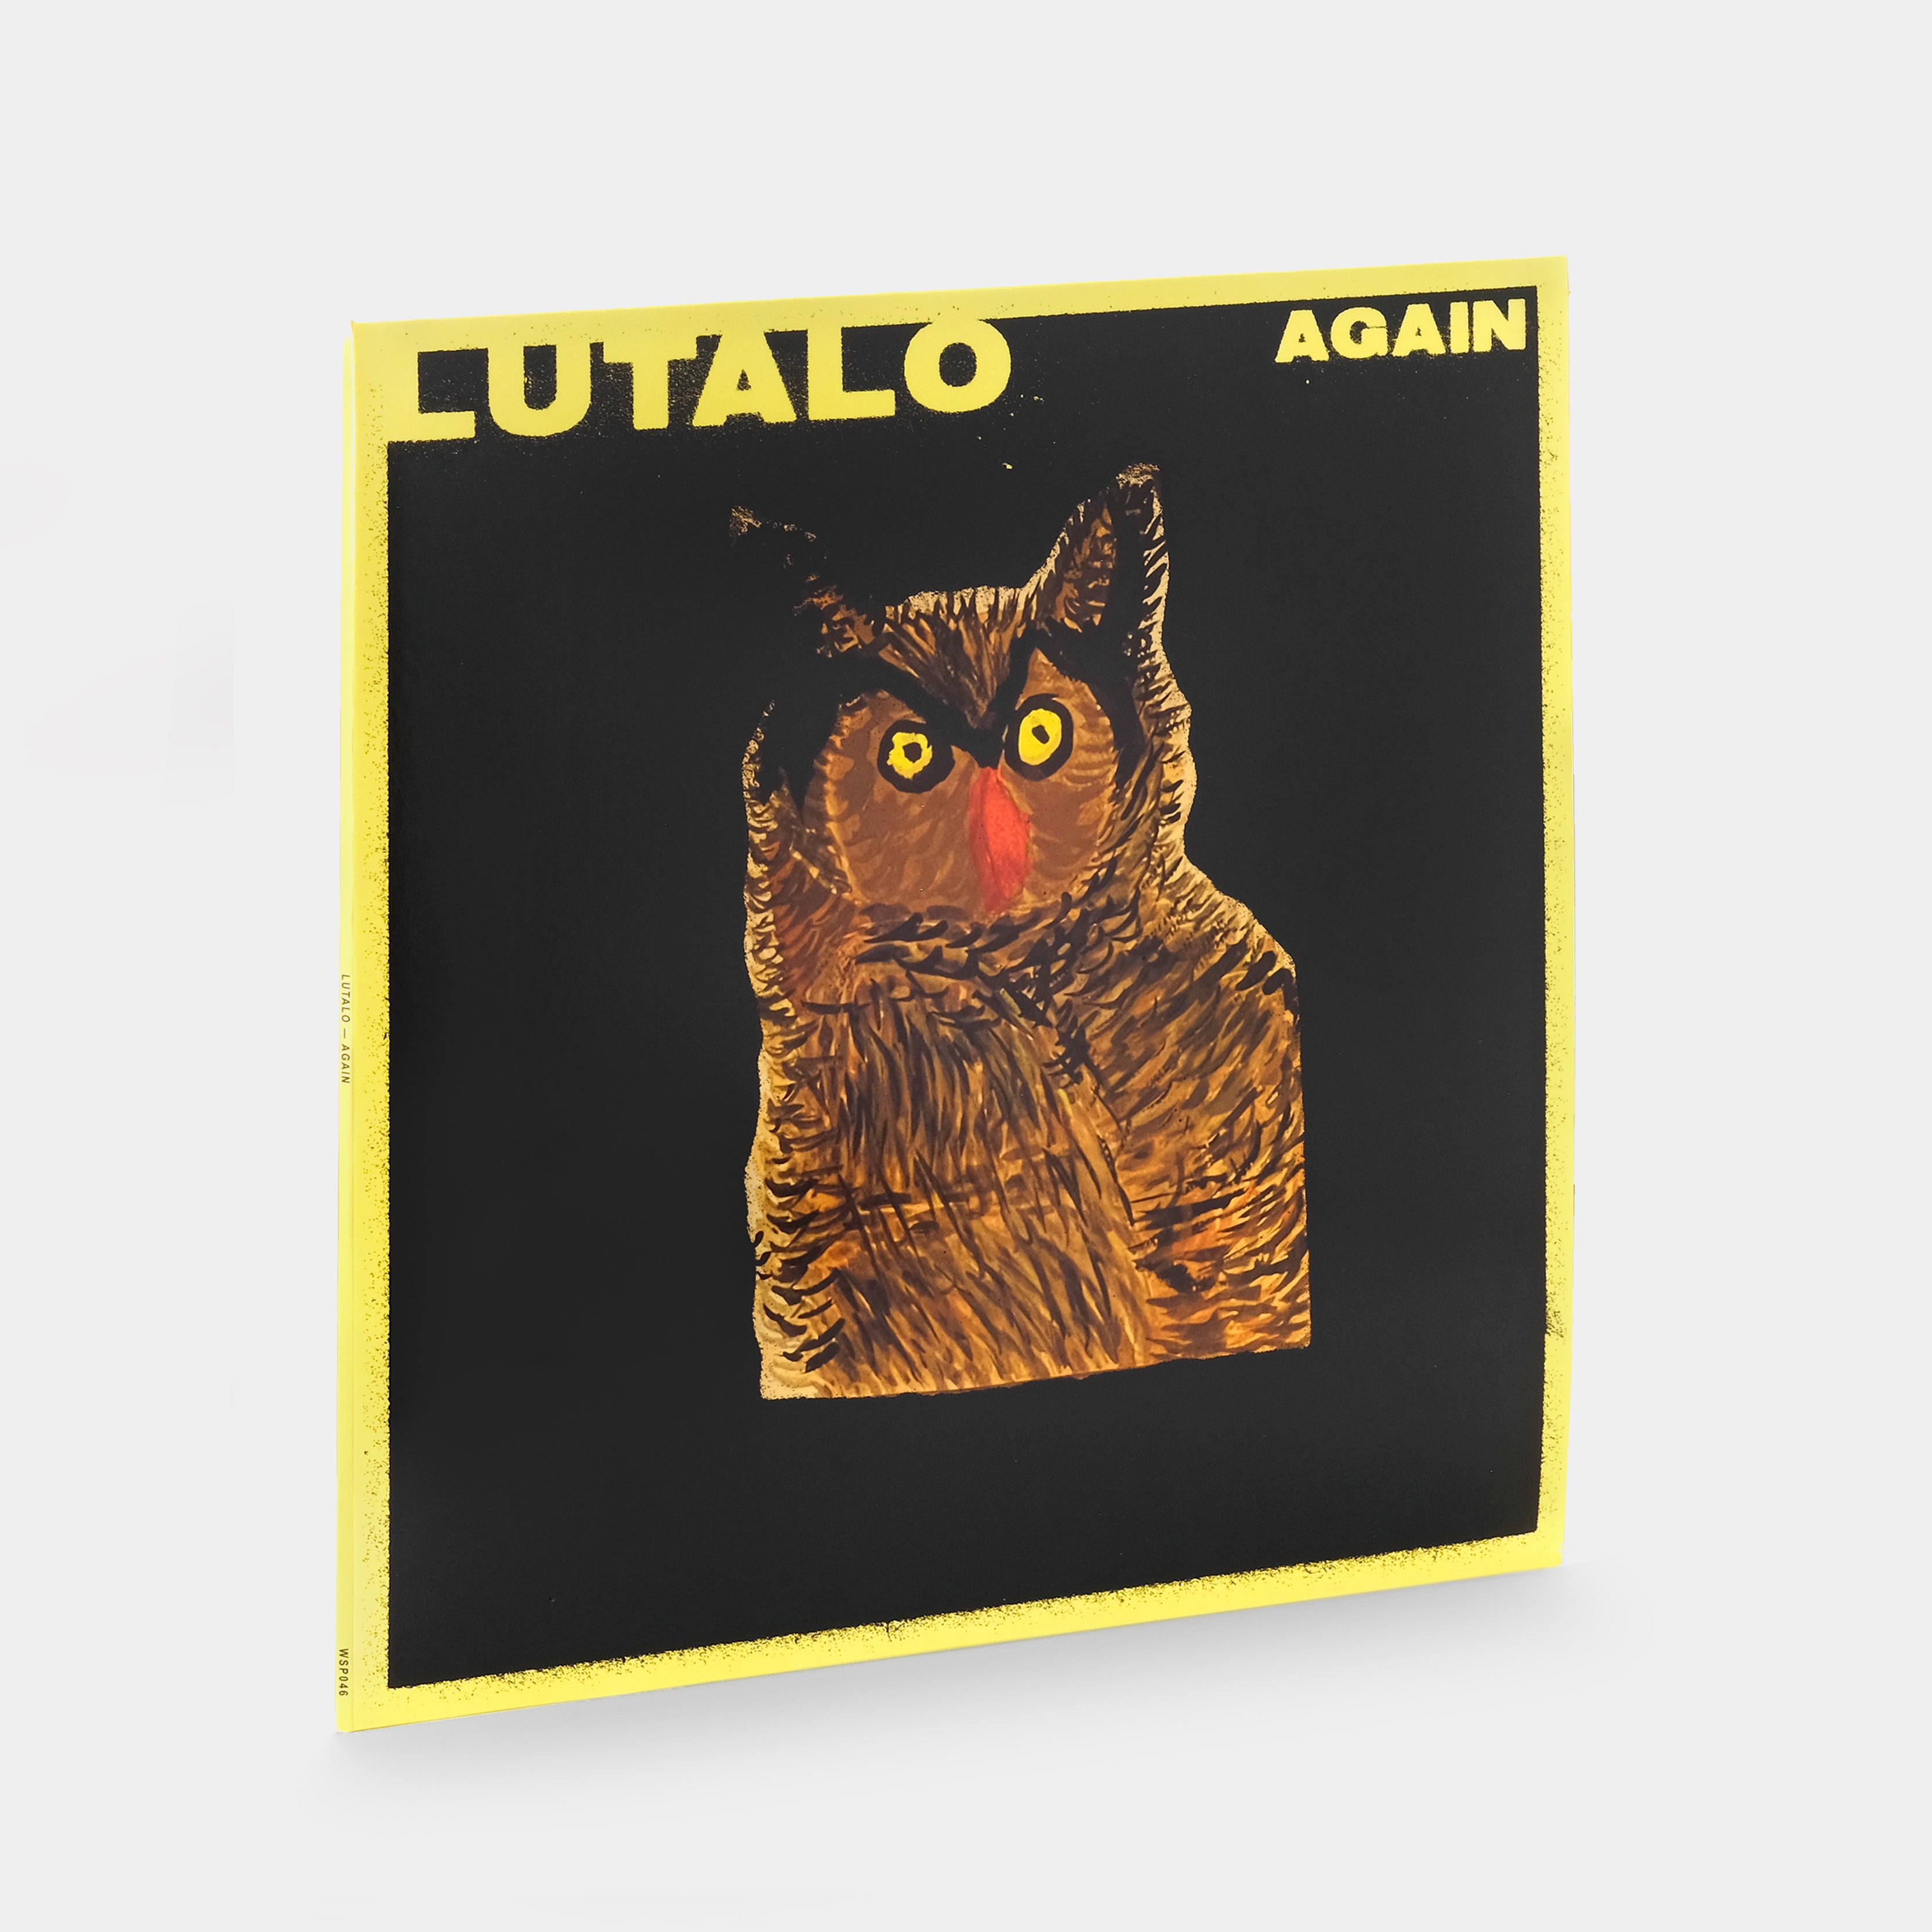 Lutalo - Again LP Transparent Yellow Vinyl Record